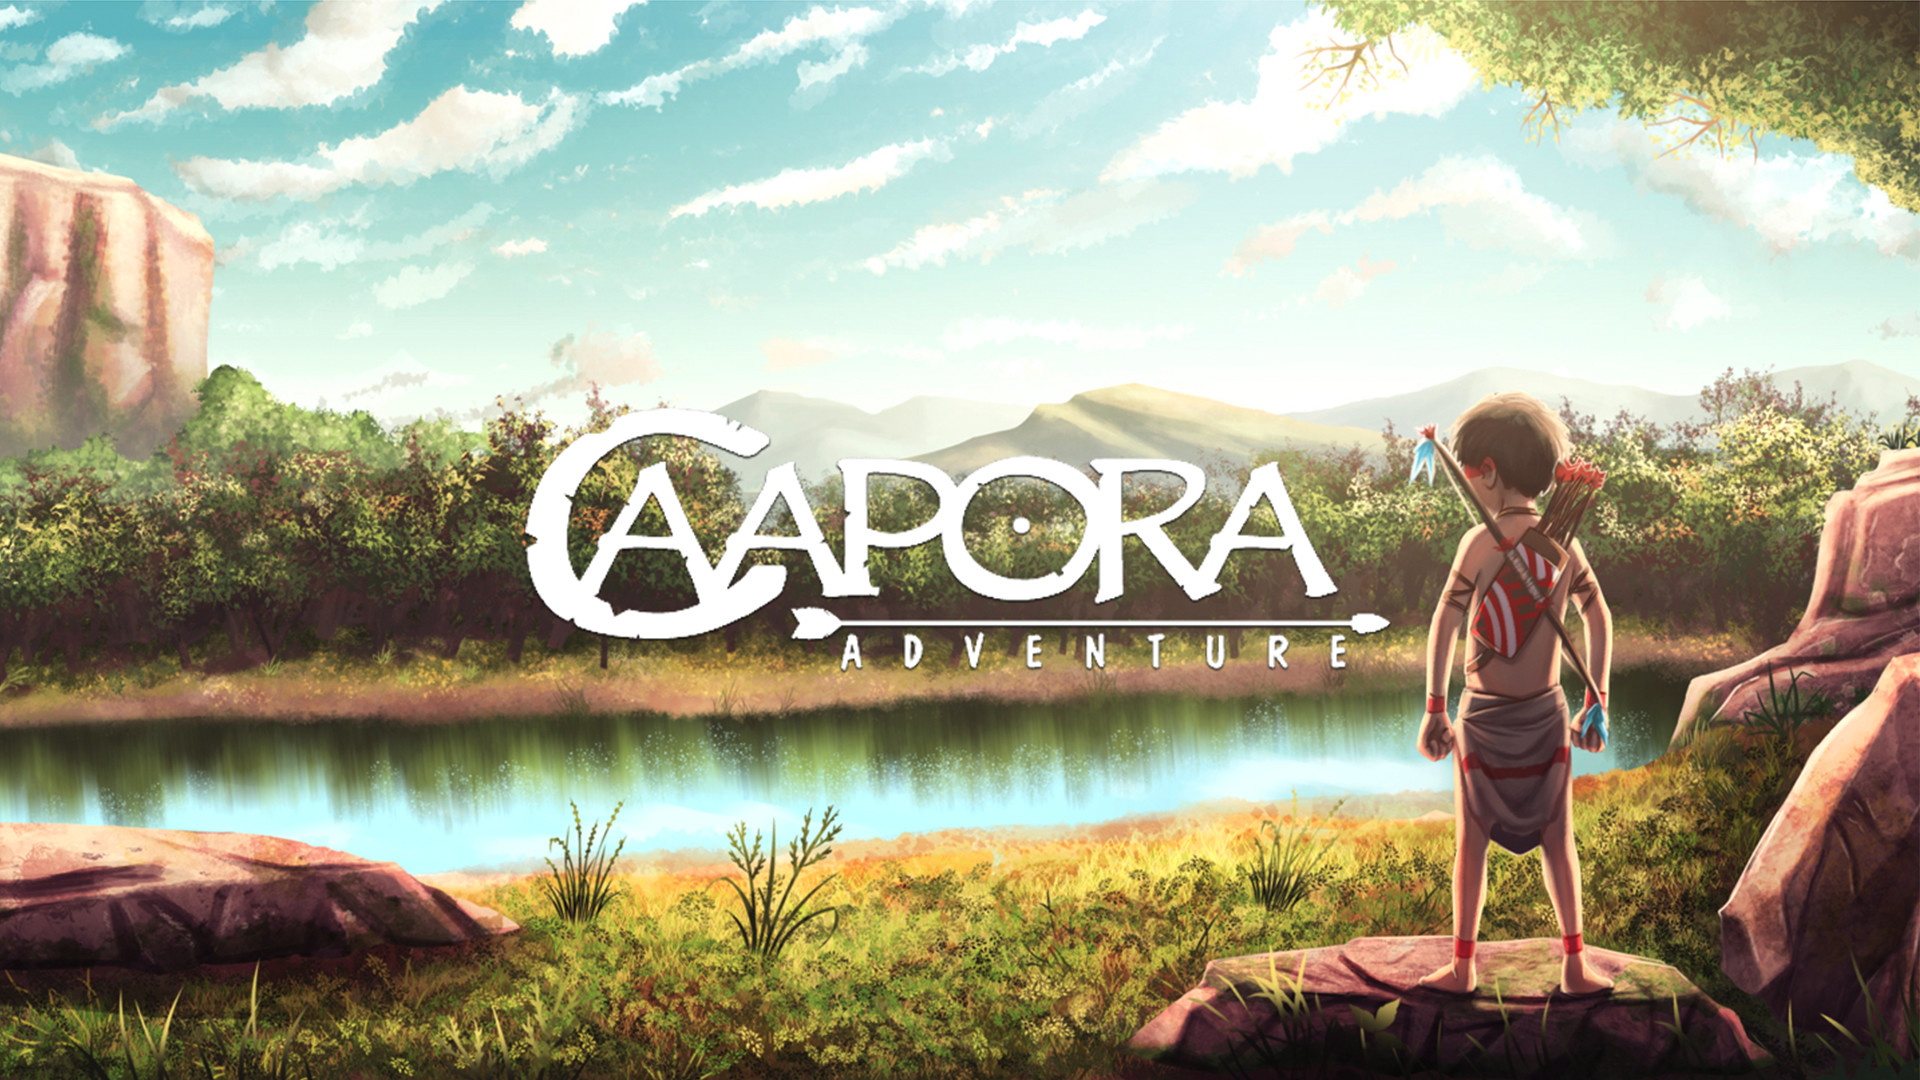 Caapora Adventure - Ojibe's Revenge Soundtrack screenshot